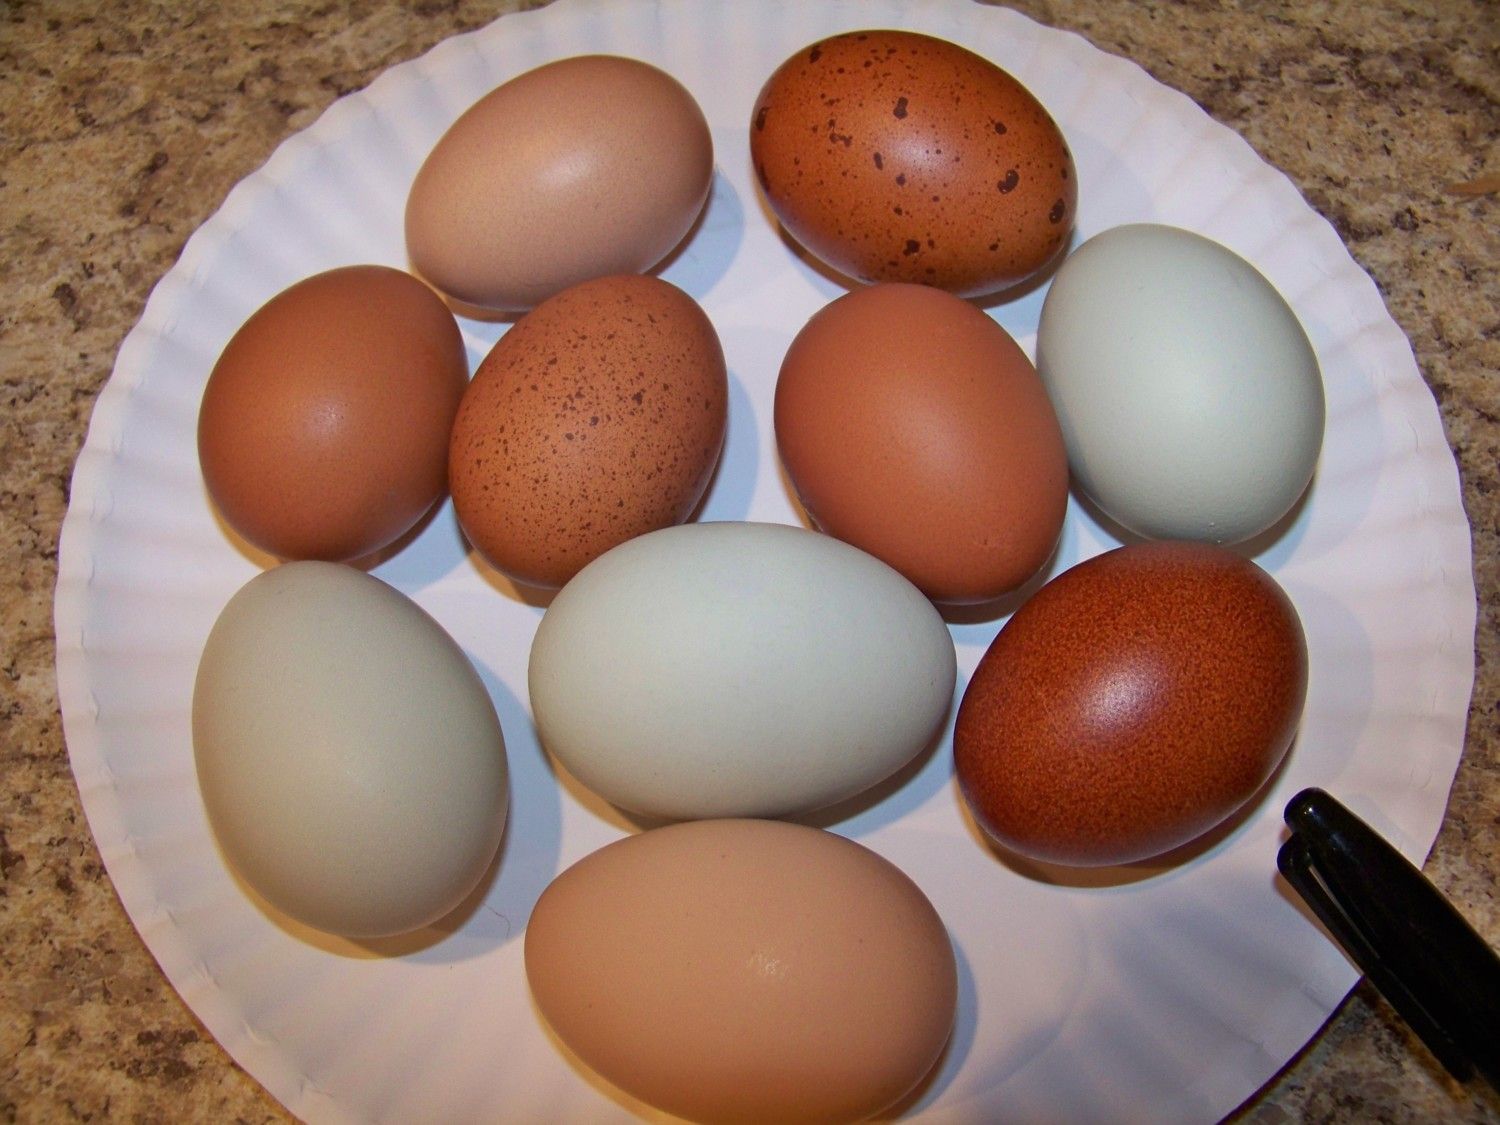 I have Marans eggs like the dark ones here. 